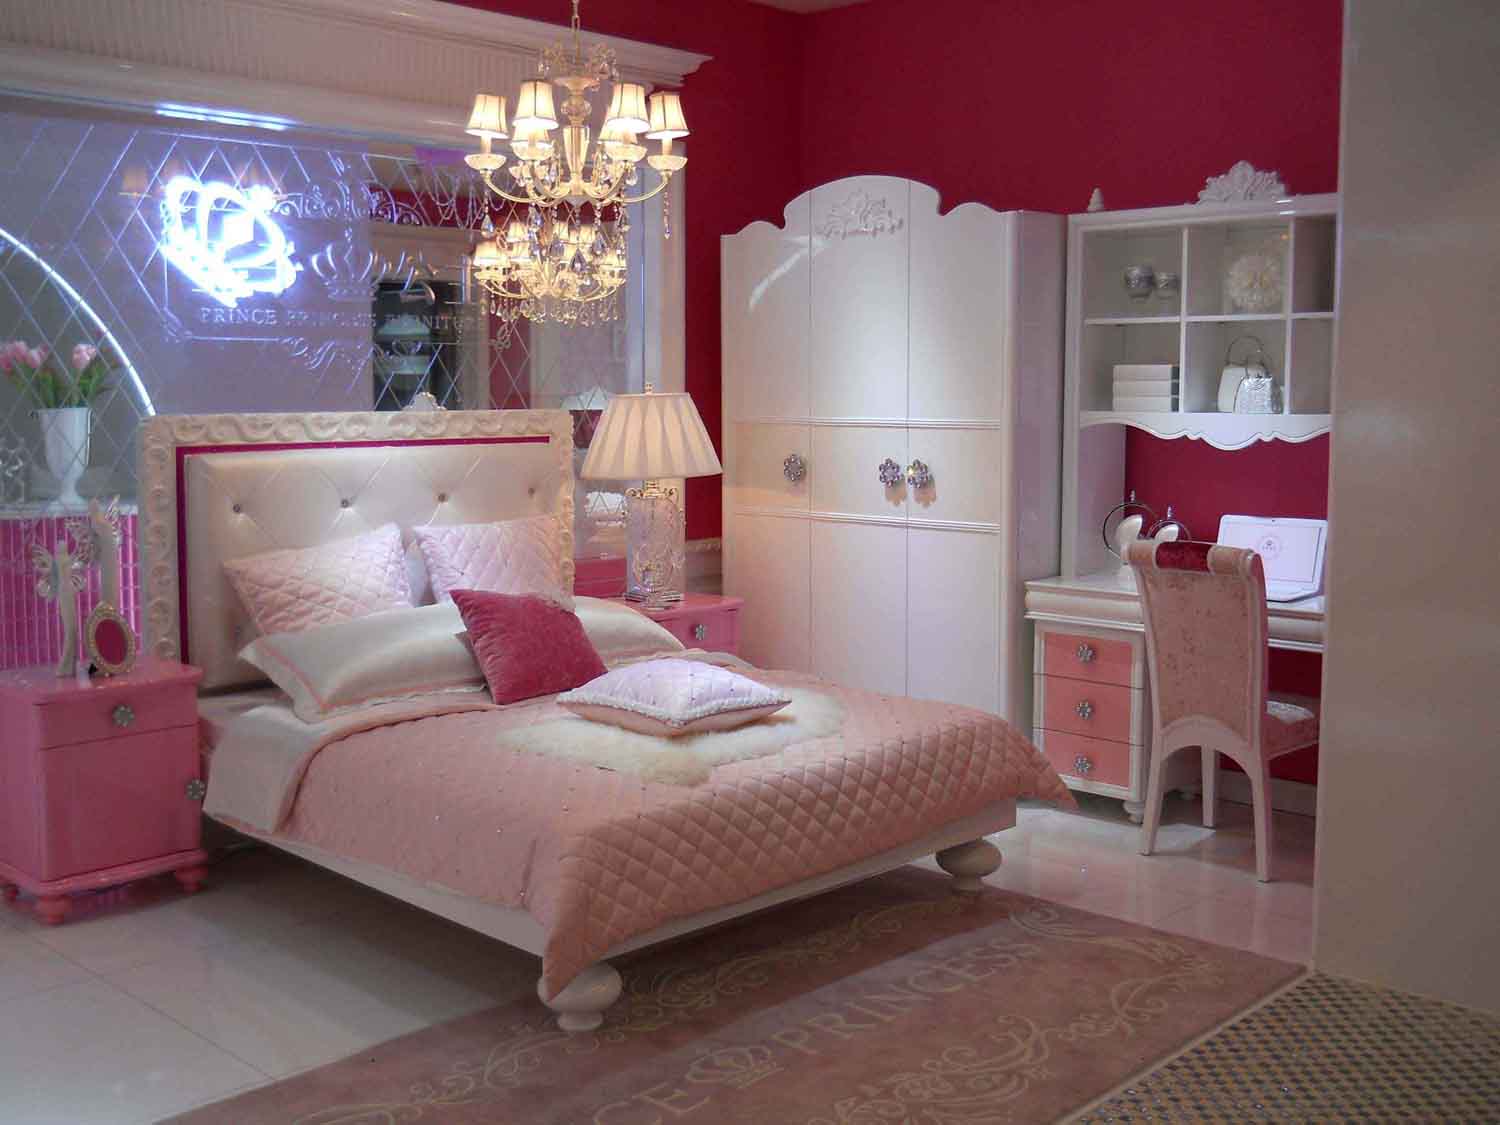 Big Lots Bedroom Furniture for Kids | Interior & Exterior Ideas